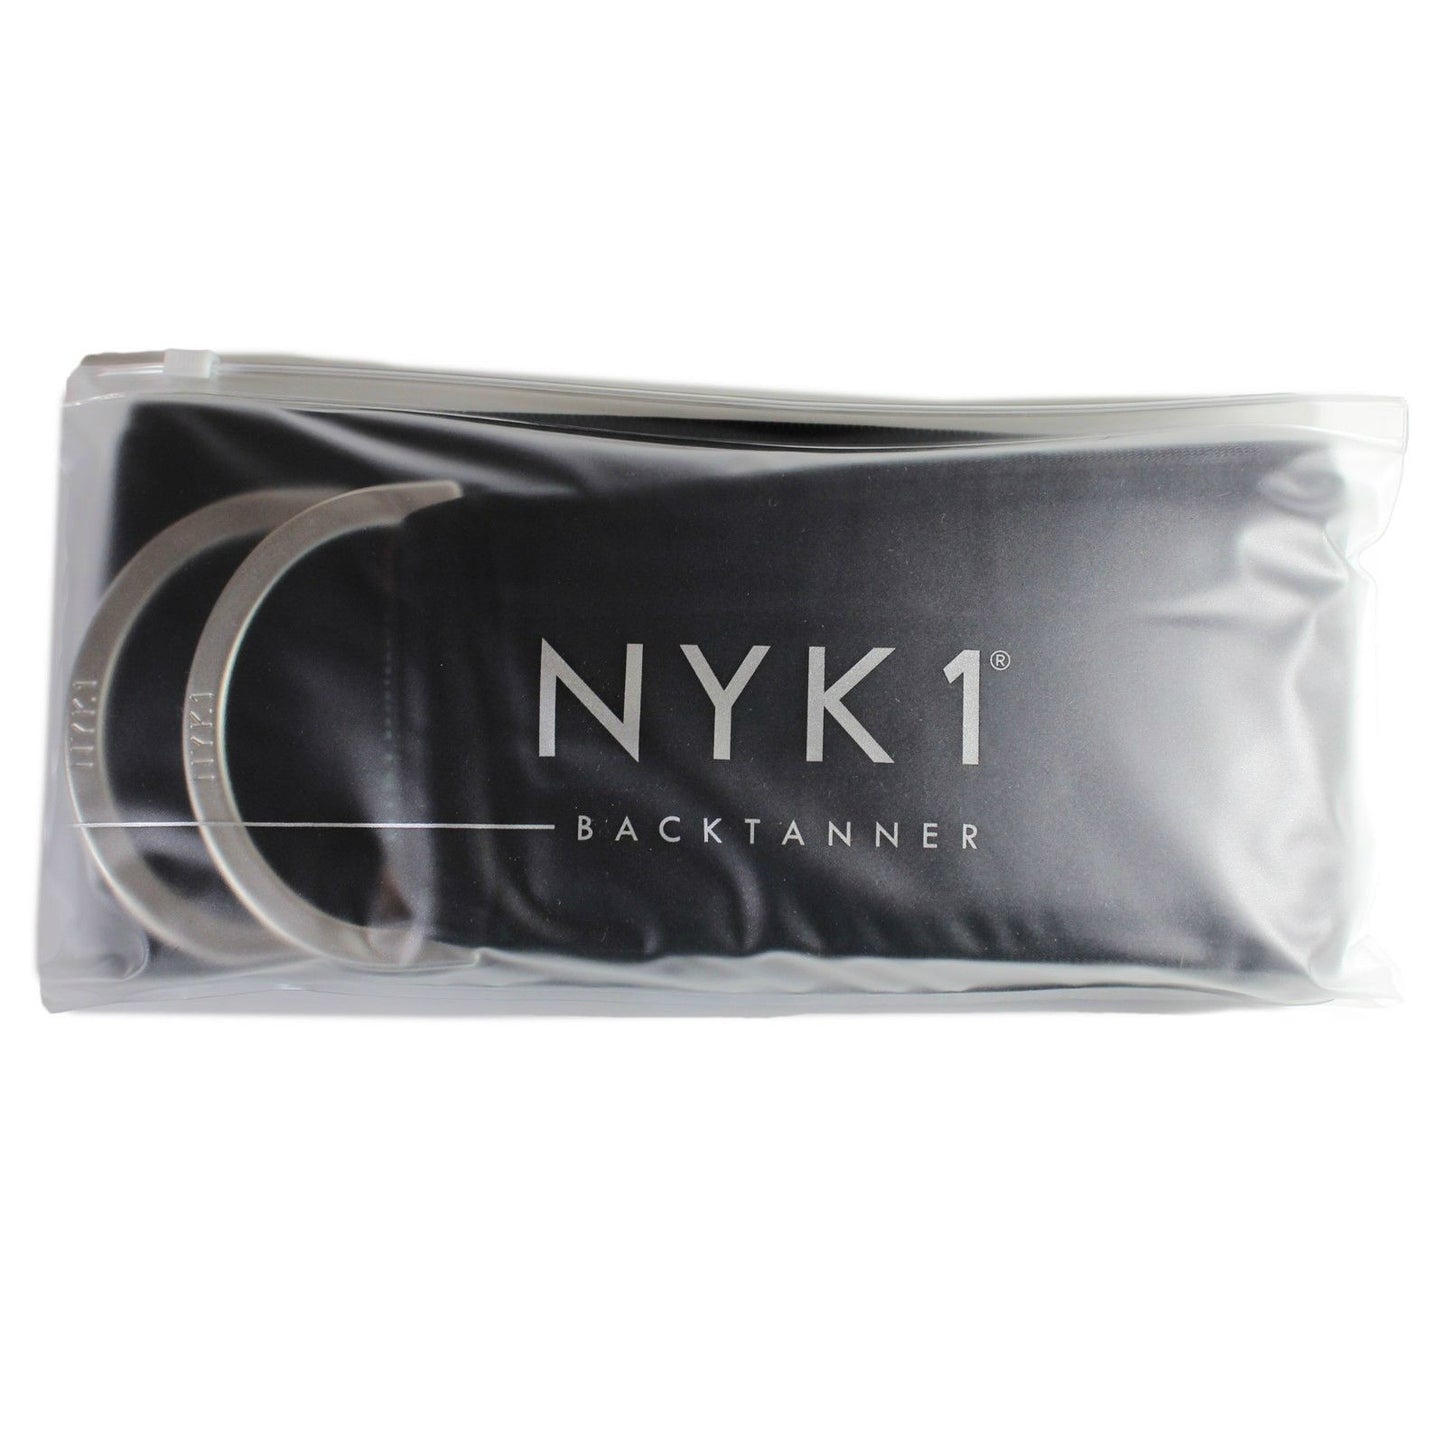 NYK1 Self Tan Back Tanner Body Mitt Applicator Glove